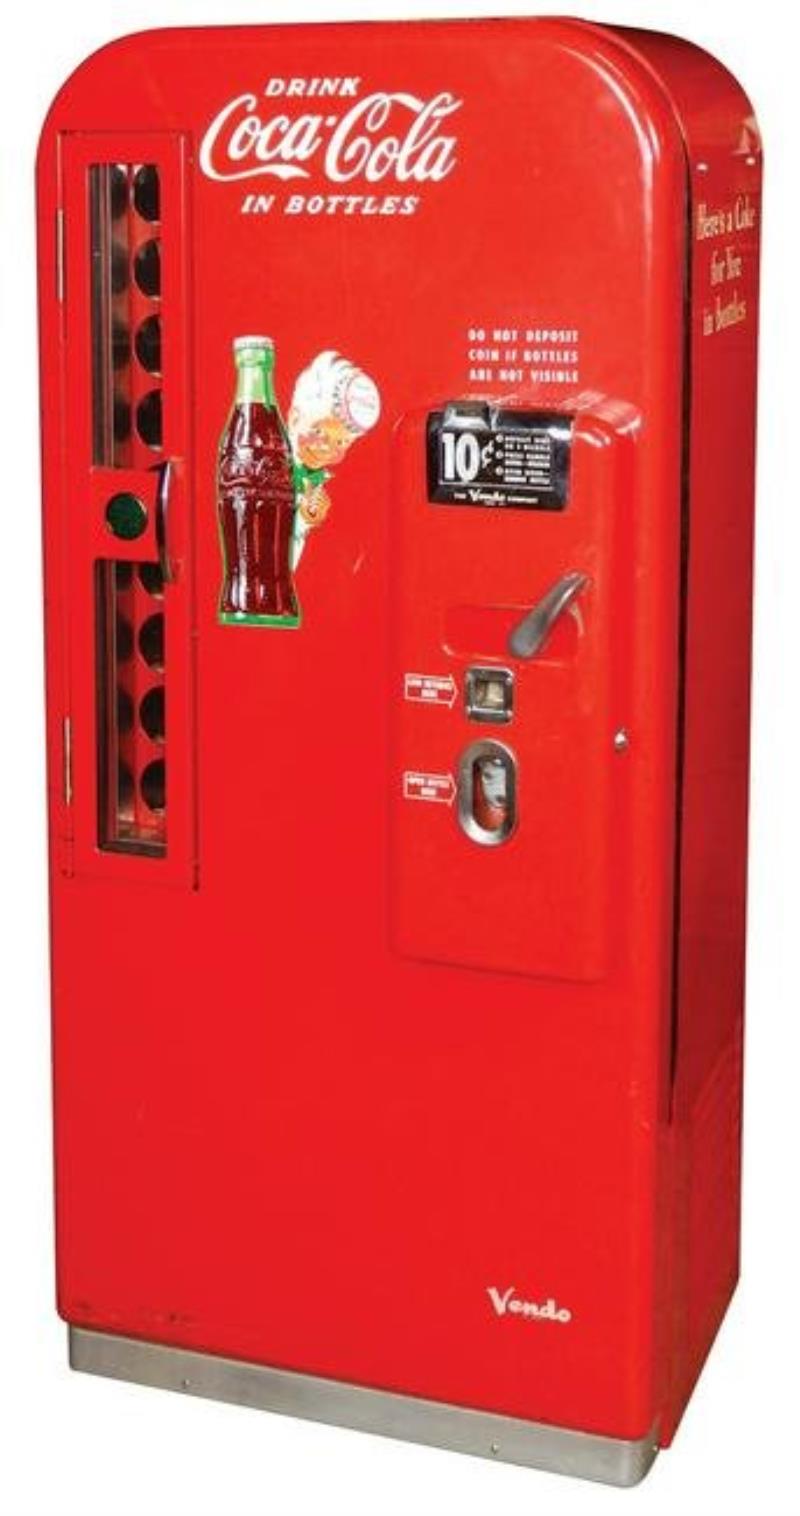 Coca-Cola Coin-Operated Vending Machine, Vendo 81A, 10